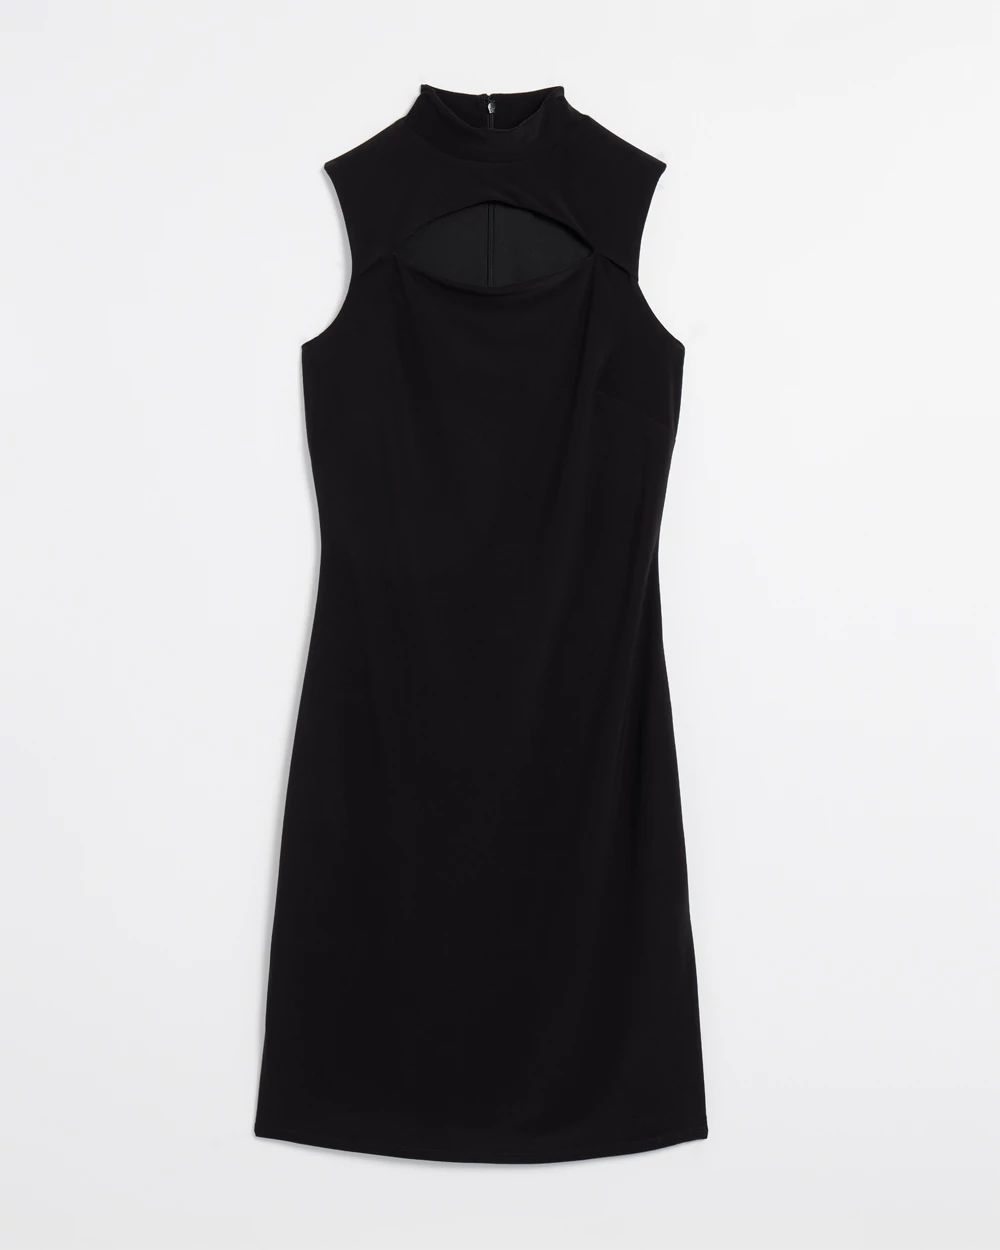 Sleeveless Mockneck Cutout Matte Jersey Midi Dress click to view larger image.